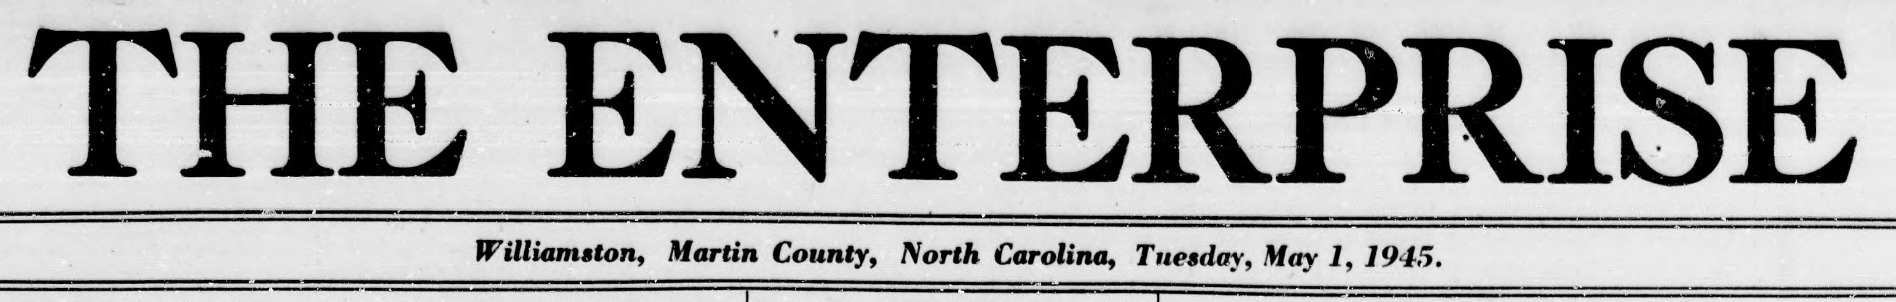 The Enterprise header from 1945. The subheader reads: Williamston, Martin County, North Carolina. Tuesday, May 1, 1945.